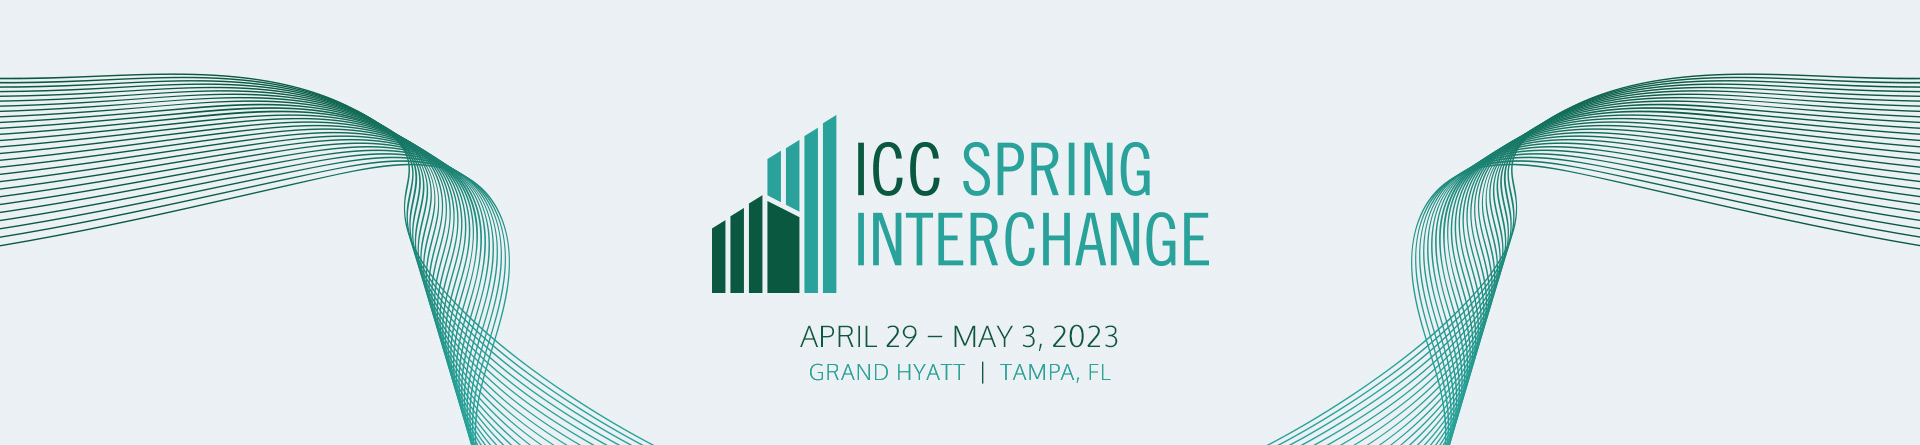 ICC Spring Interchange Training Handouts